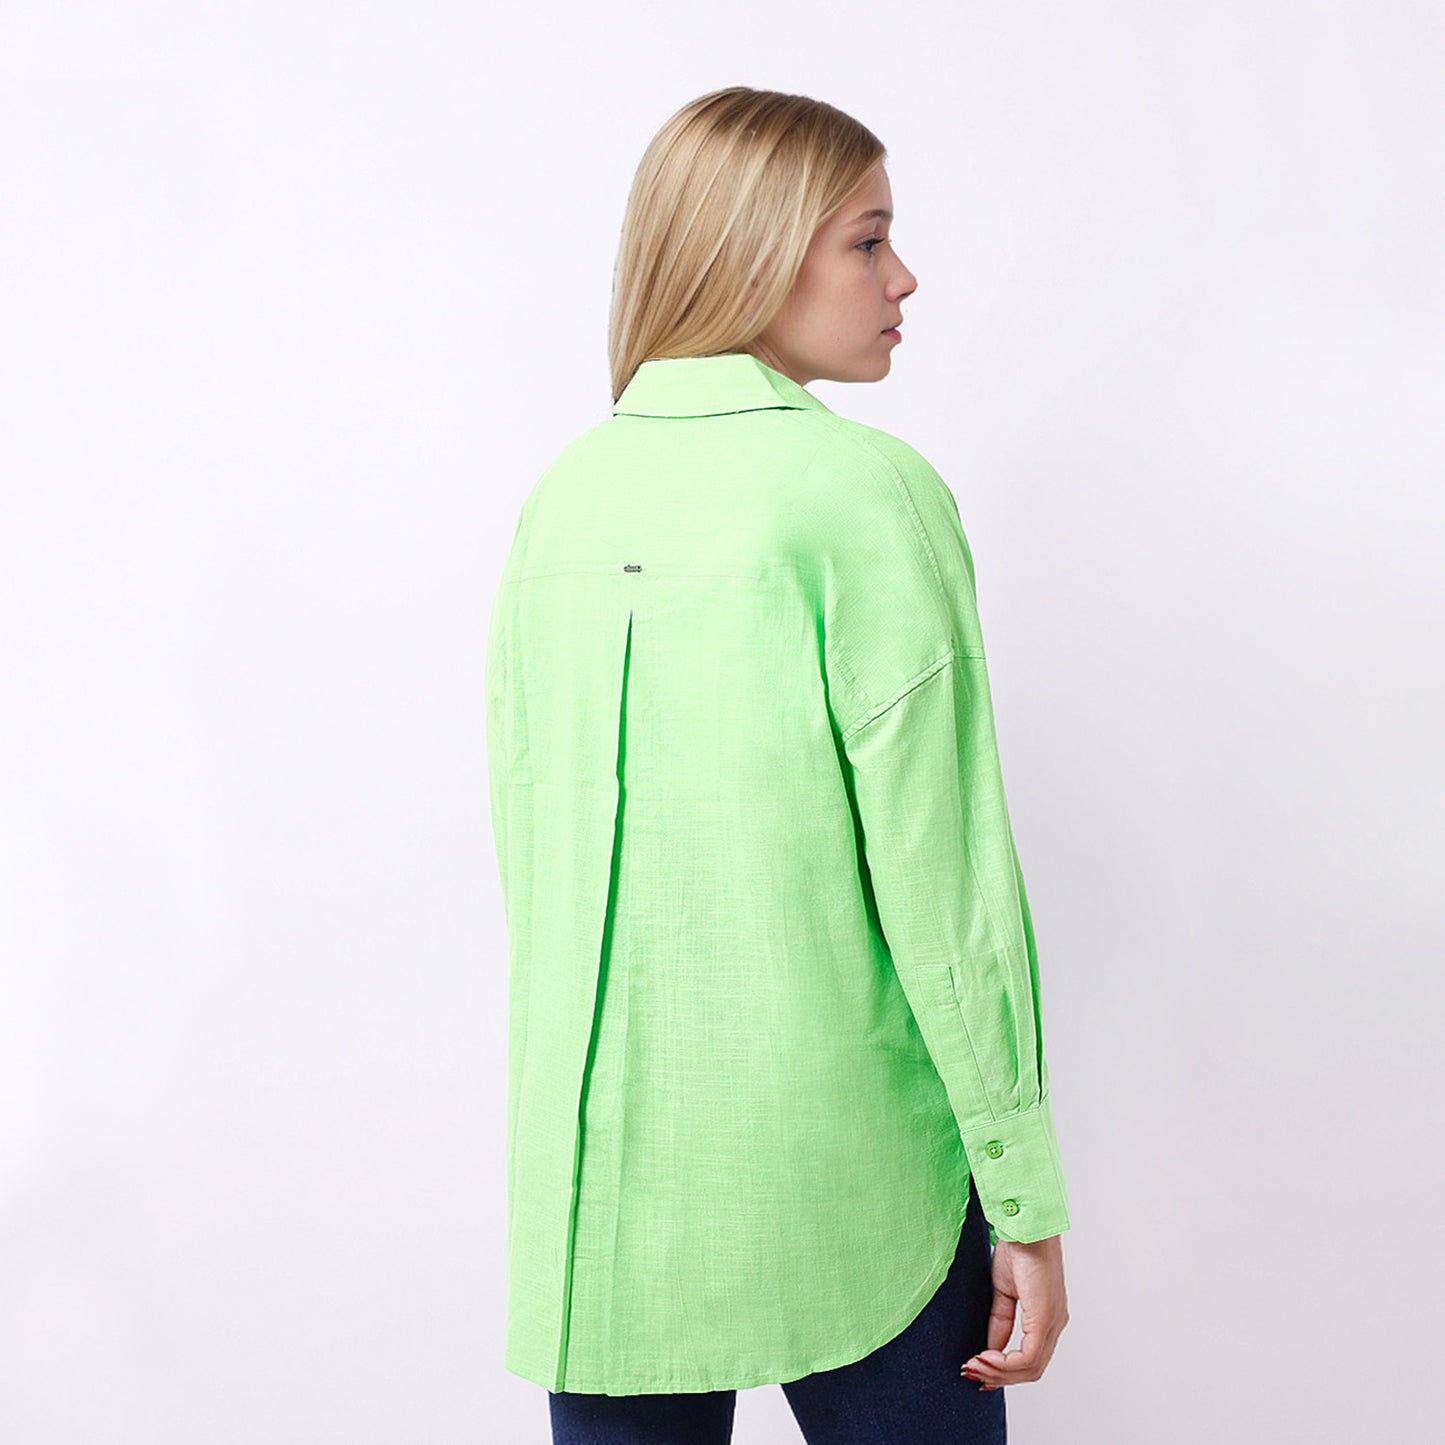 Blusa Oversize Mujer Verde Lima - 231117